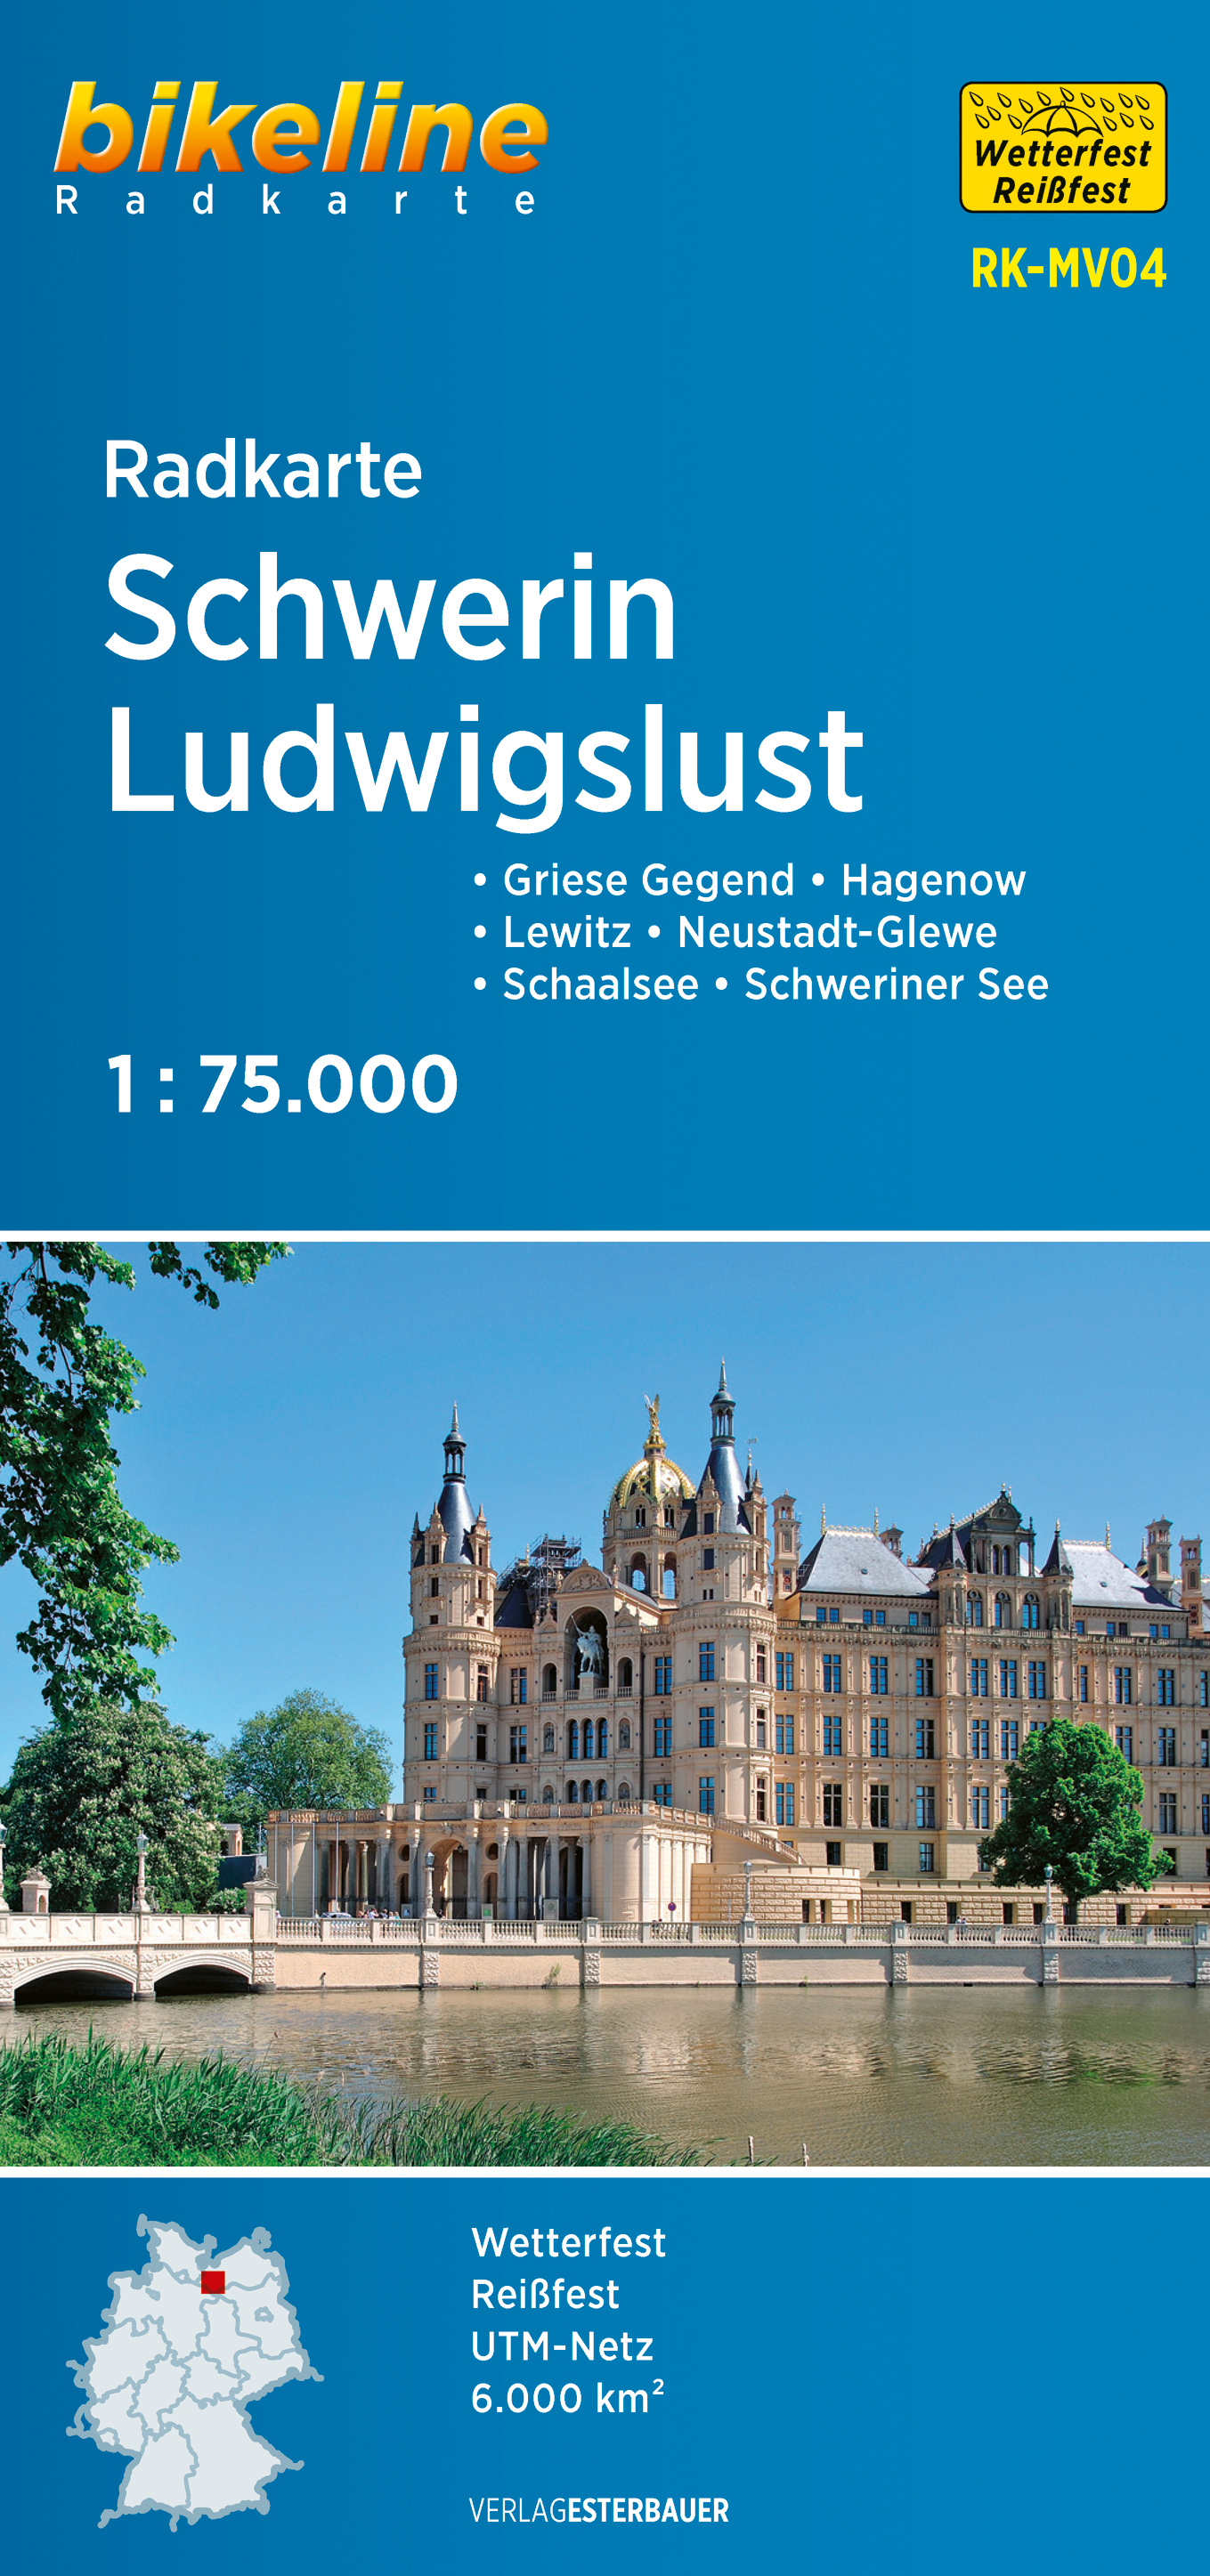 Online bestellen: Fietskaart MV04 Bikeline Radkarte Schwerin Ludwigslust | Esterbauer